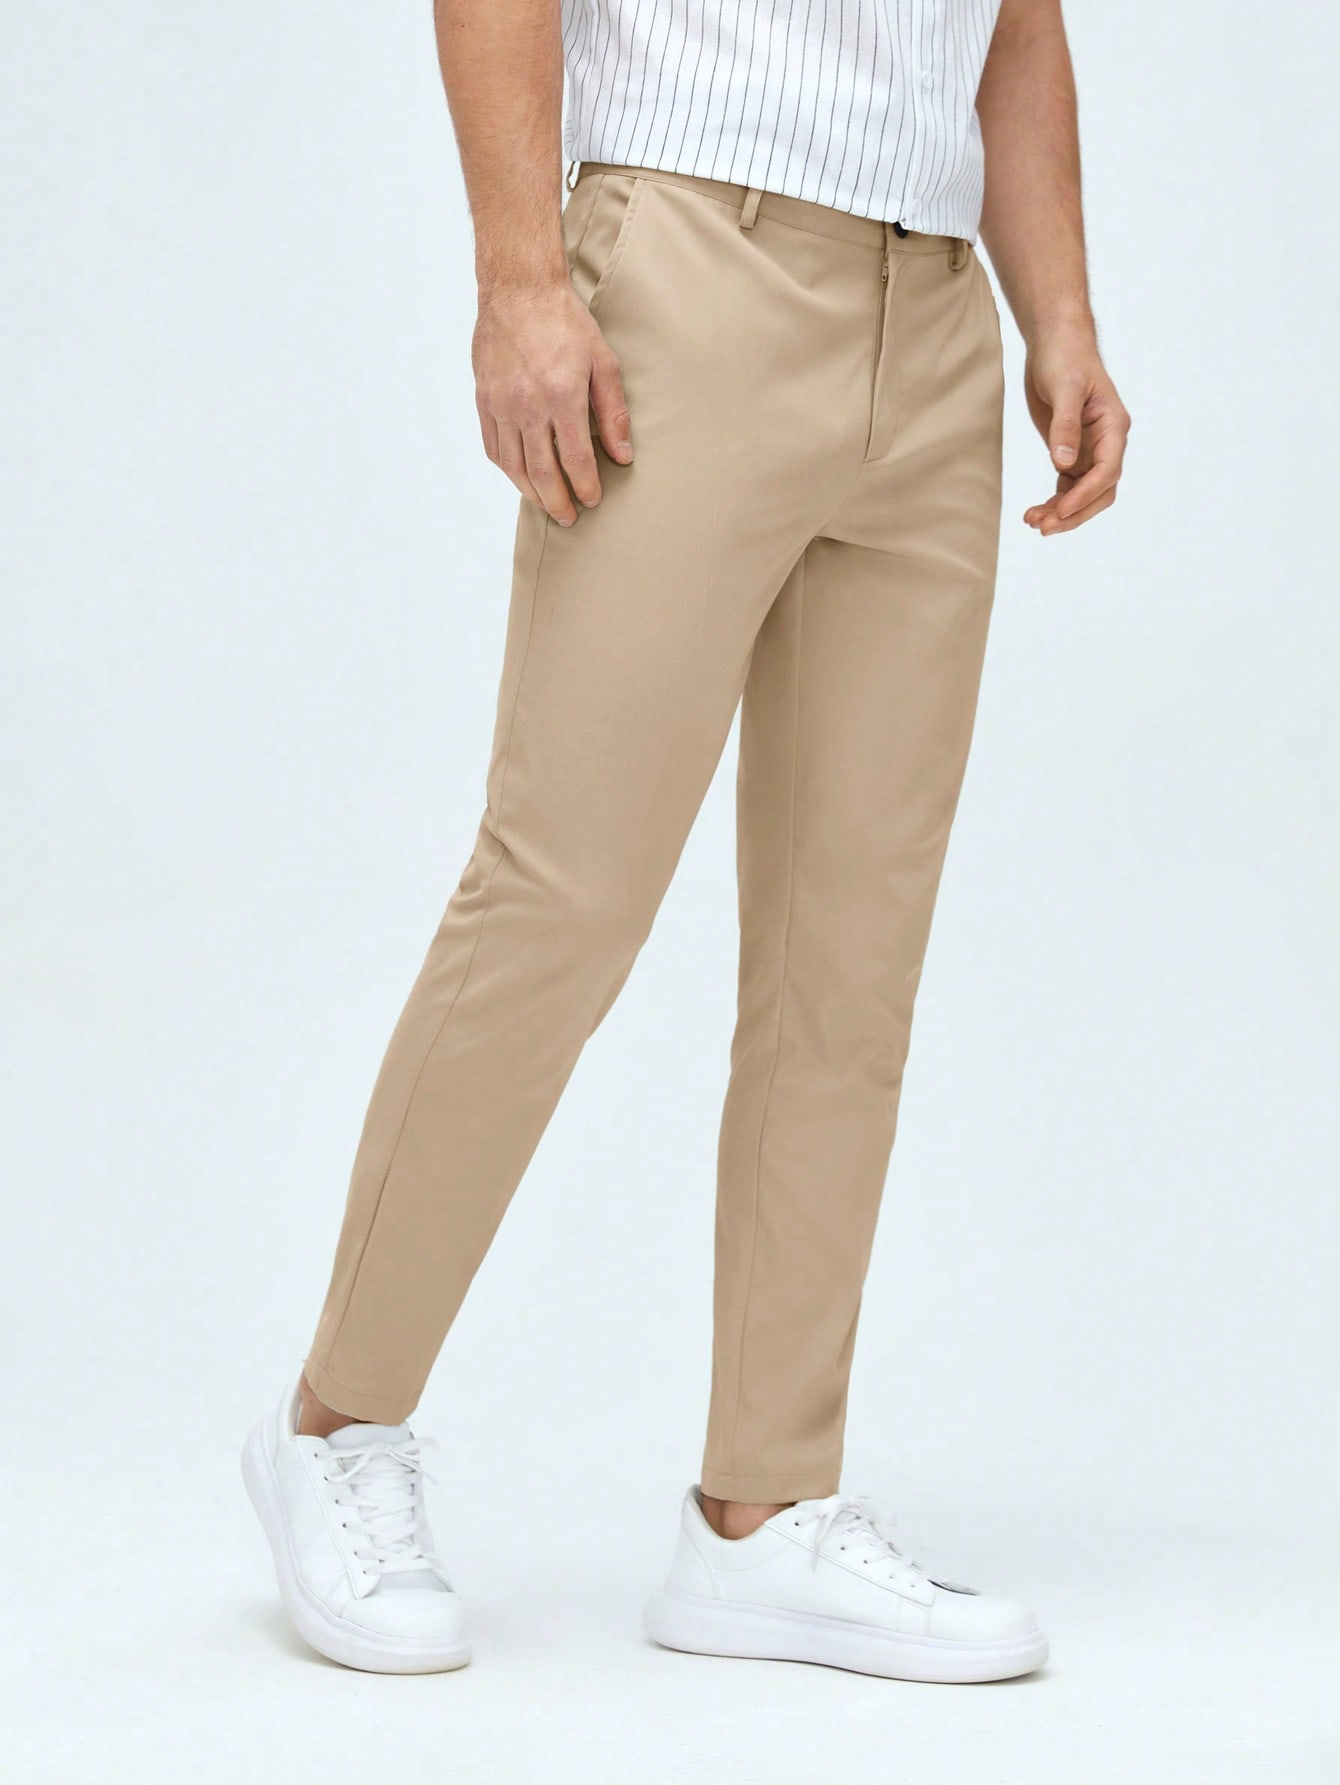 цена Мужские классические классические брюки из тканого материала с боковыми карманами Manfinity Mode, хаки